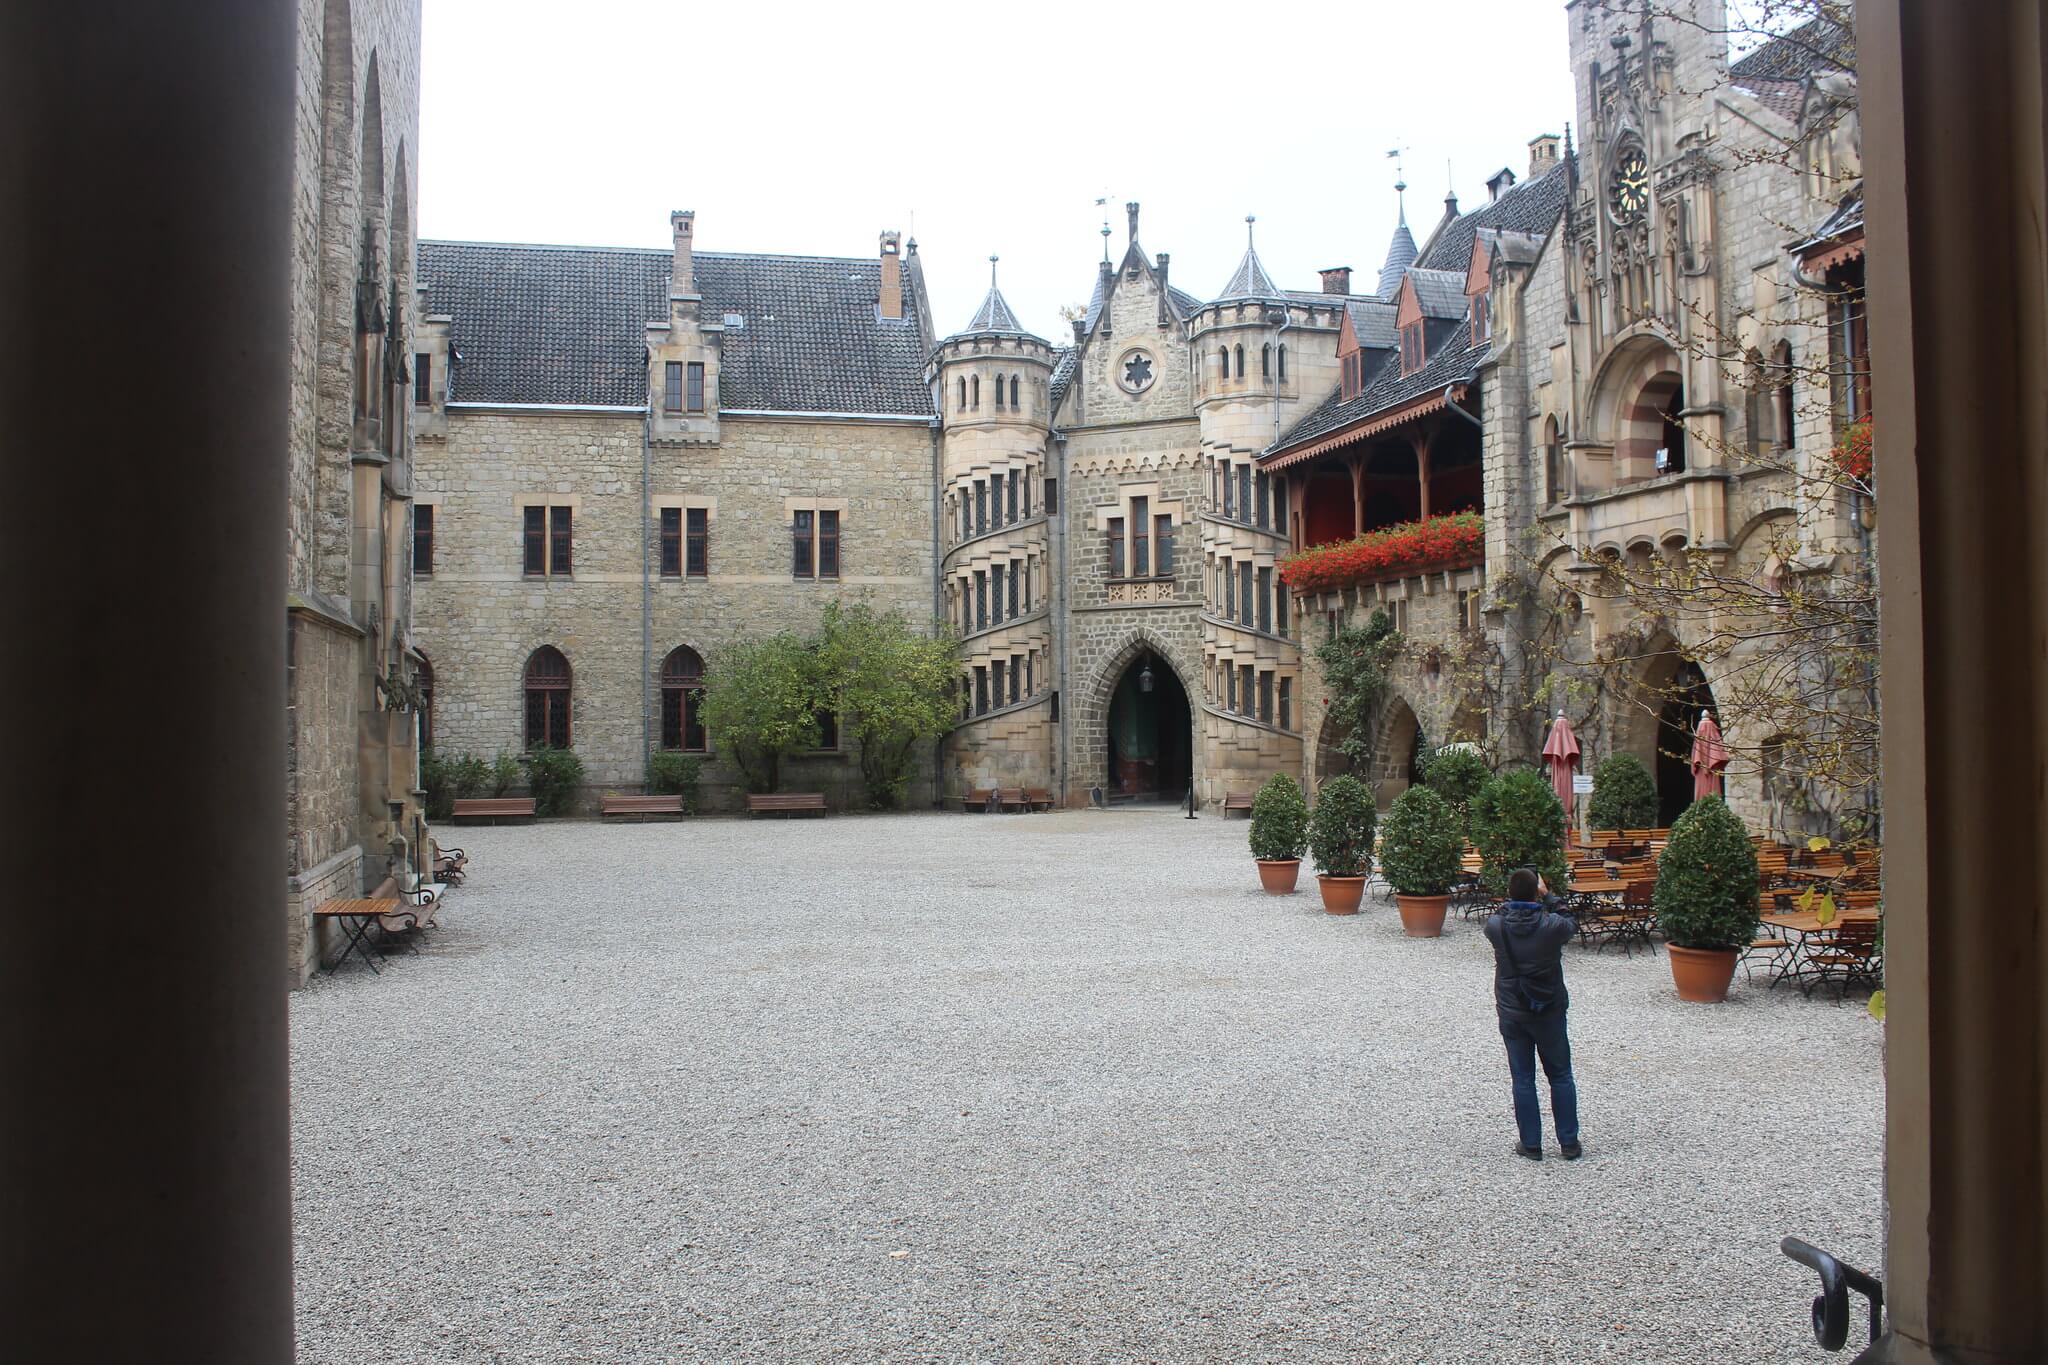 Courtyard of Marienburg Castle, Germany